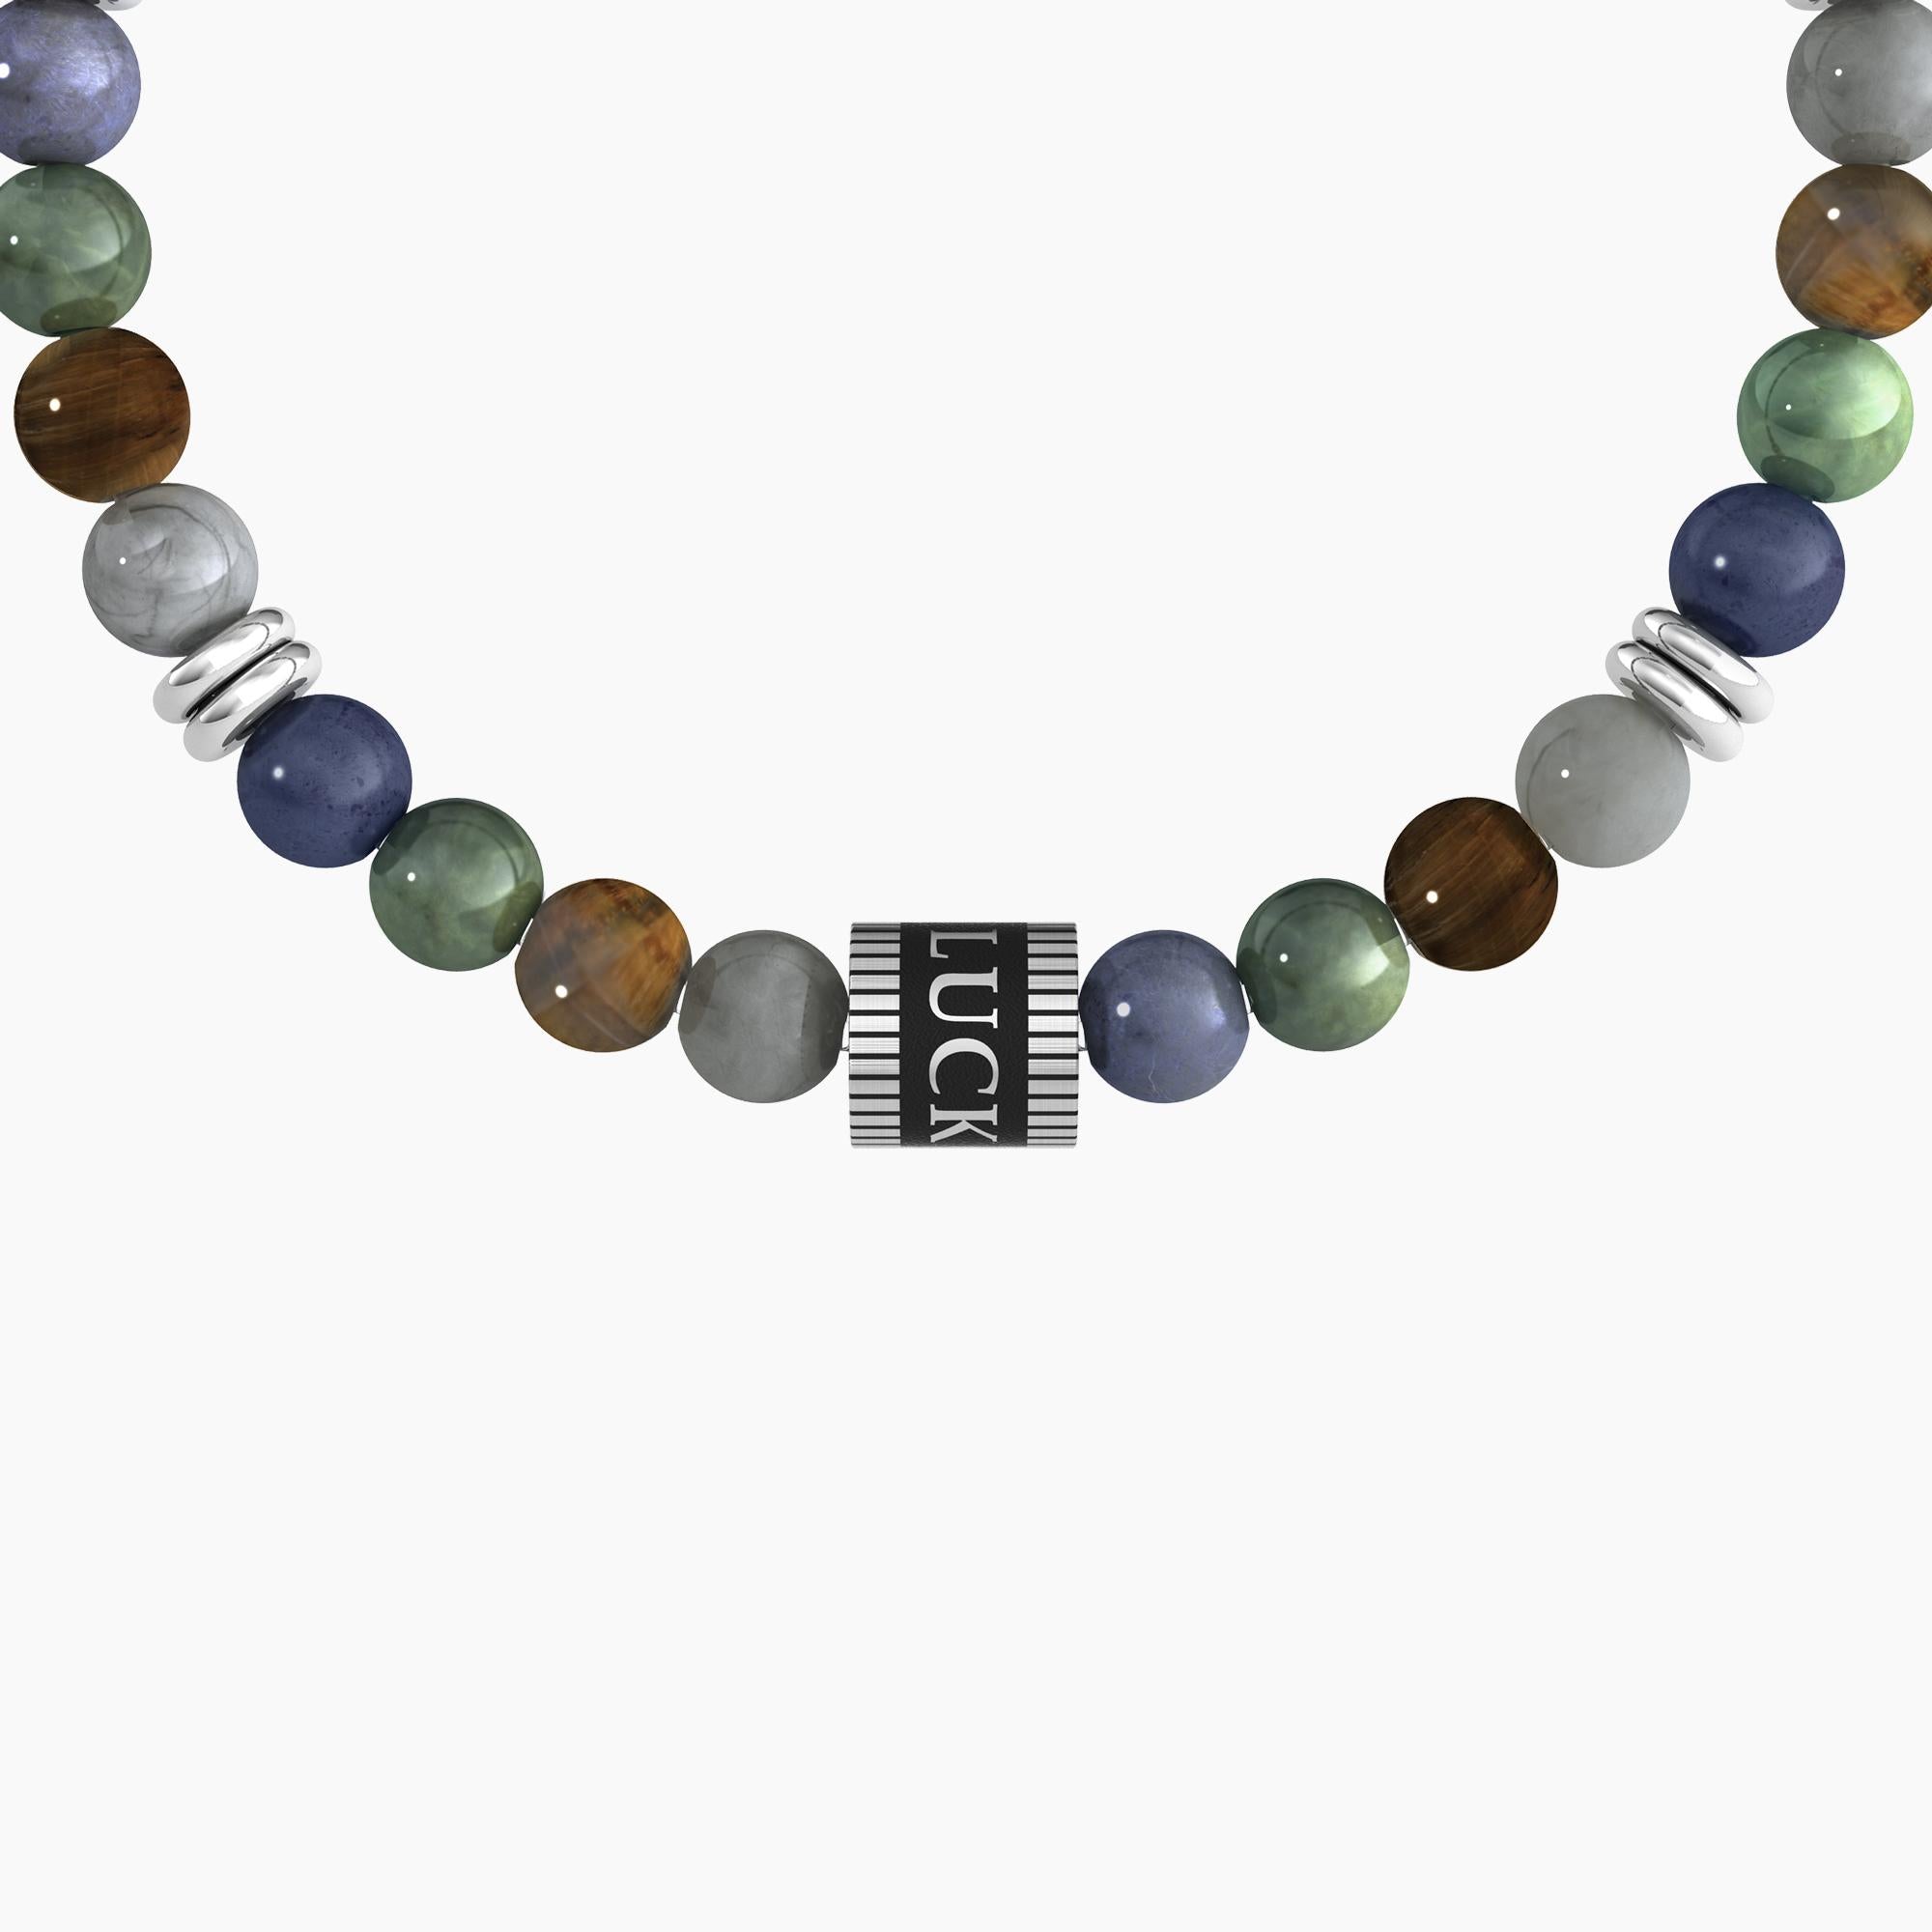 Men's elastic bracelet with multicolor stones GOOD LUCK- 732173